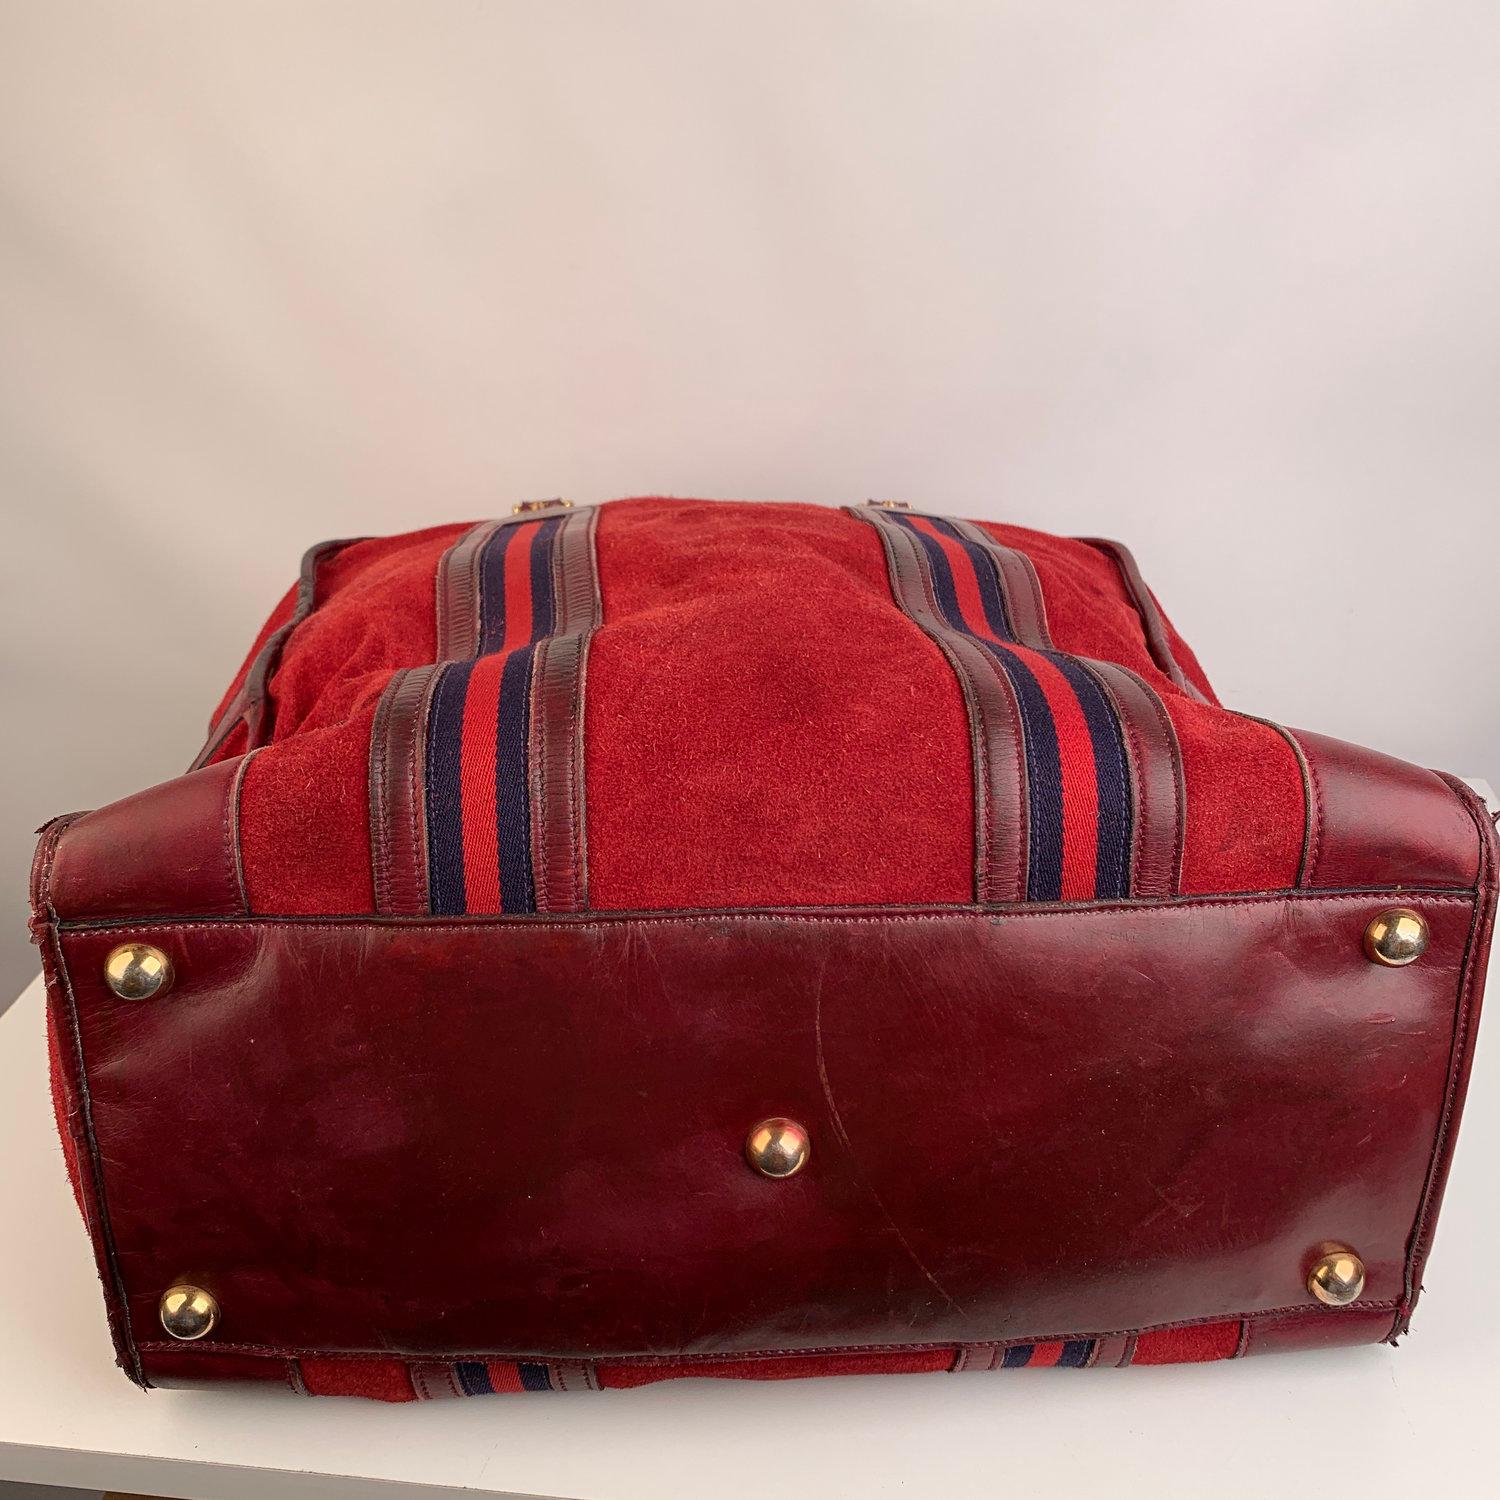 Gucci Vintage Red Suede Weekender Travel Bag with Stripes 1